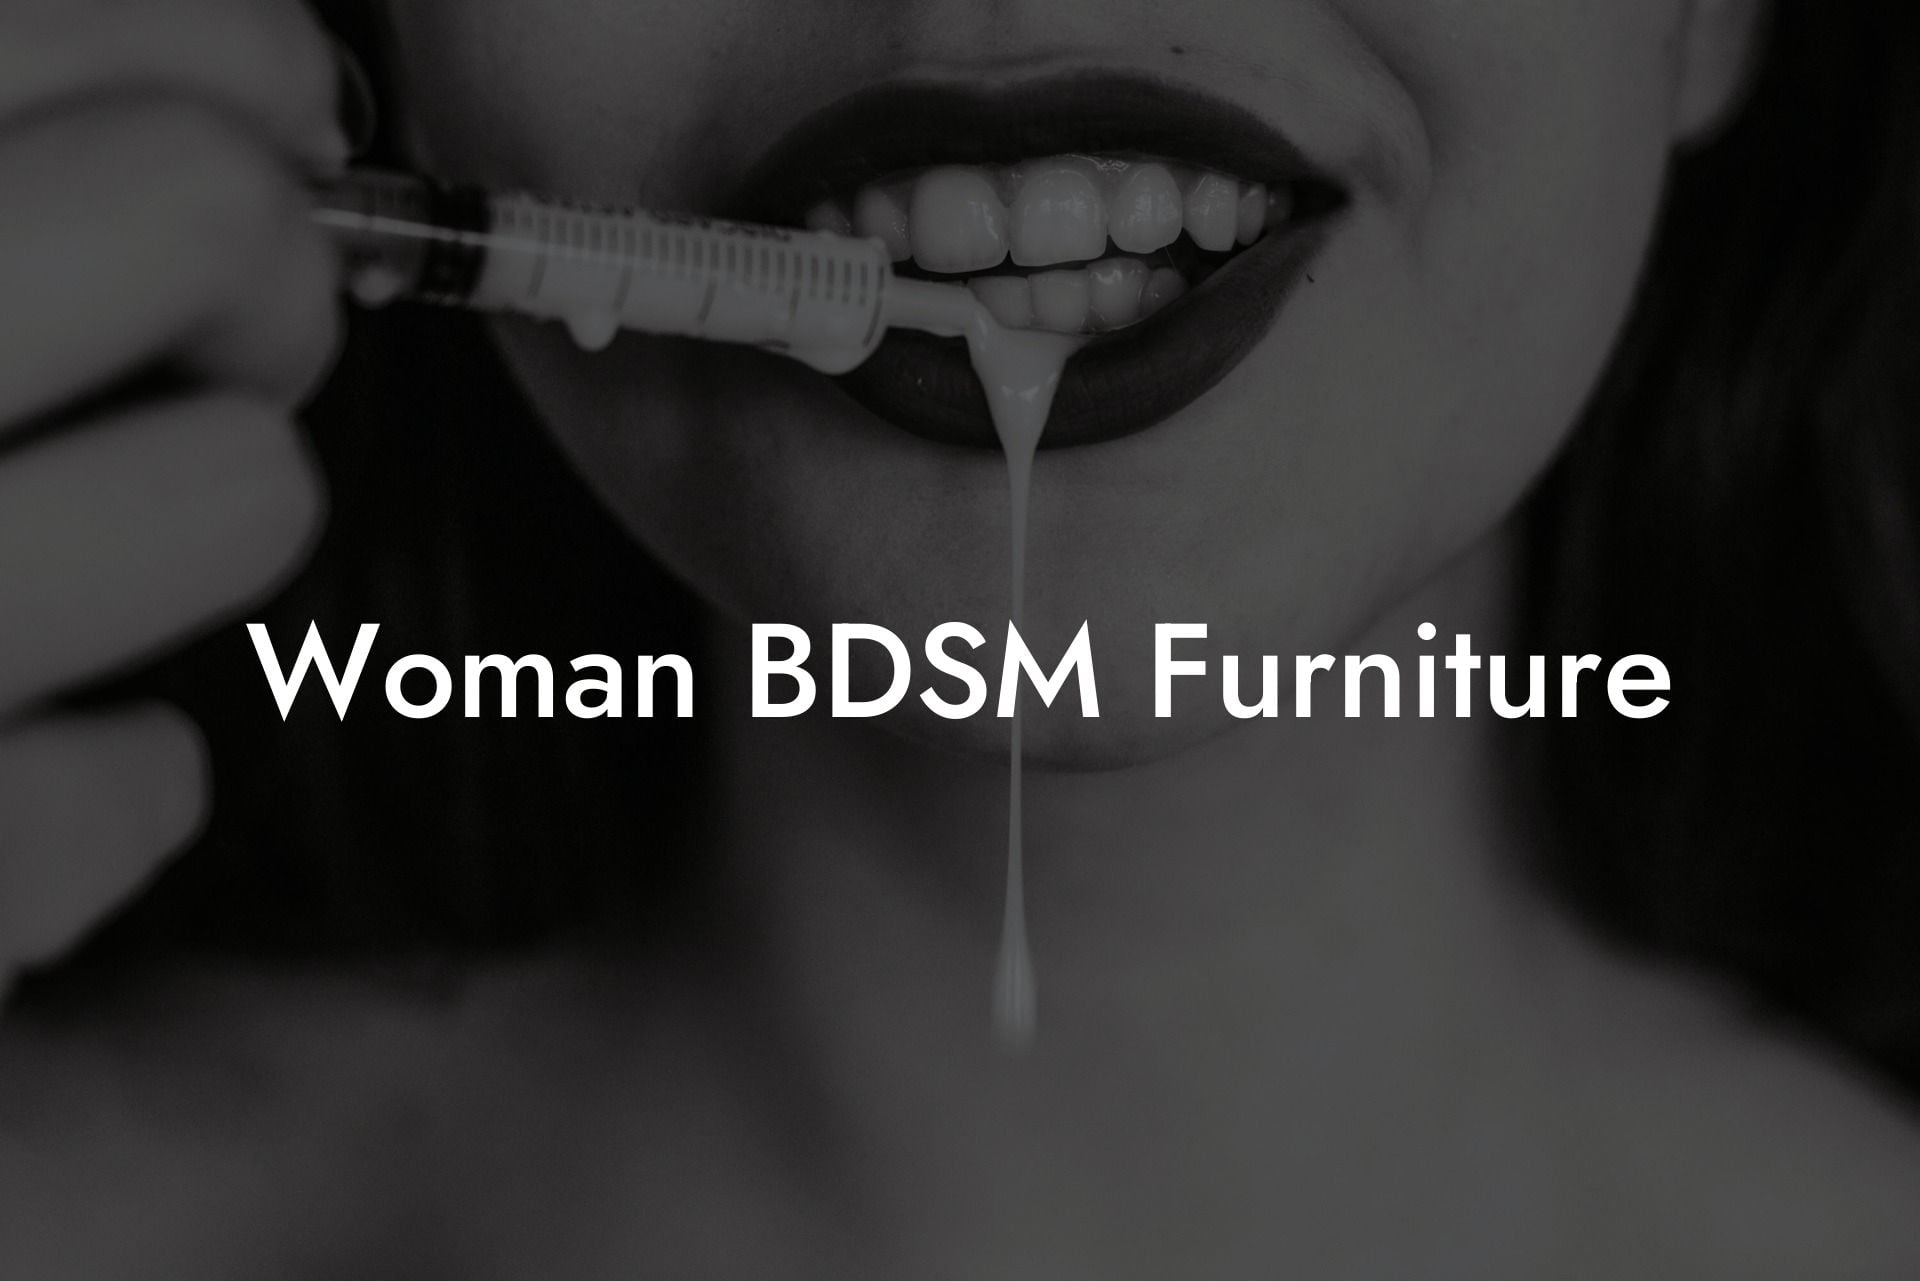 Woman BDSM Furniture